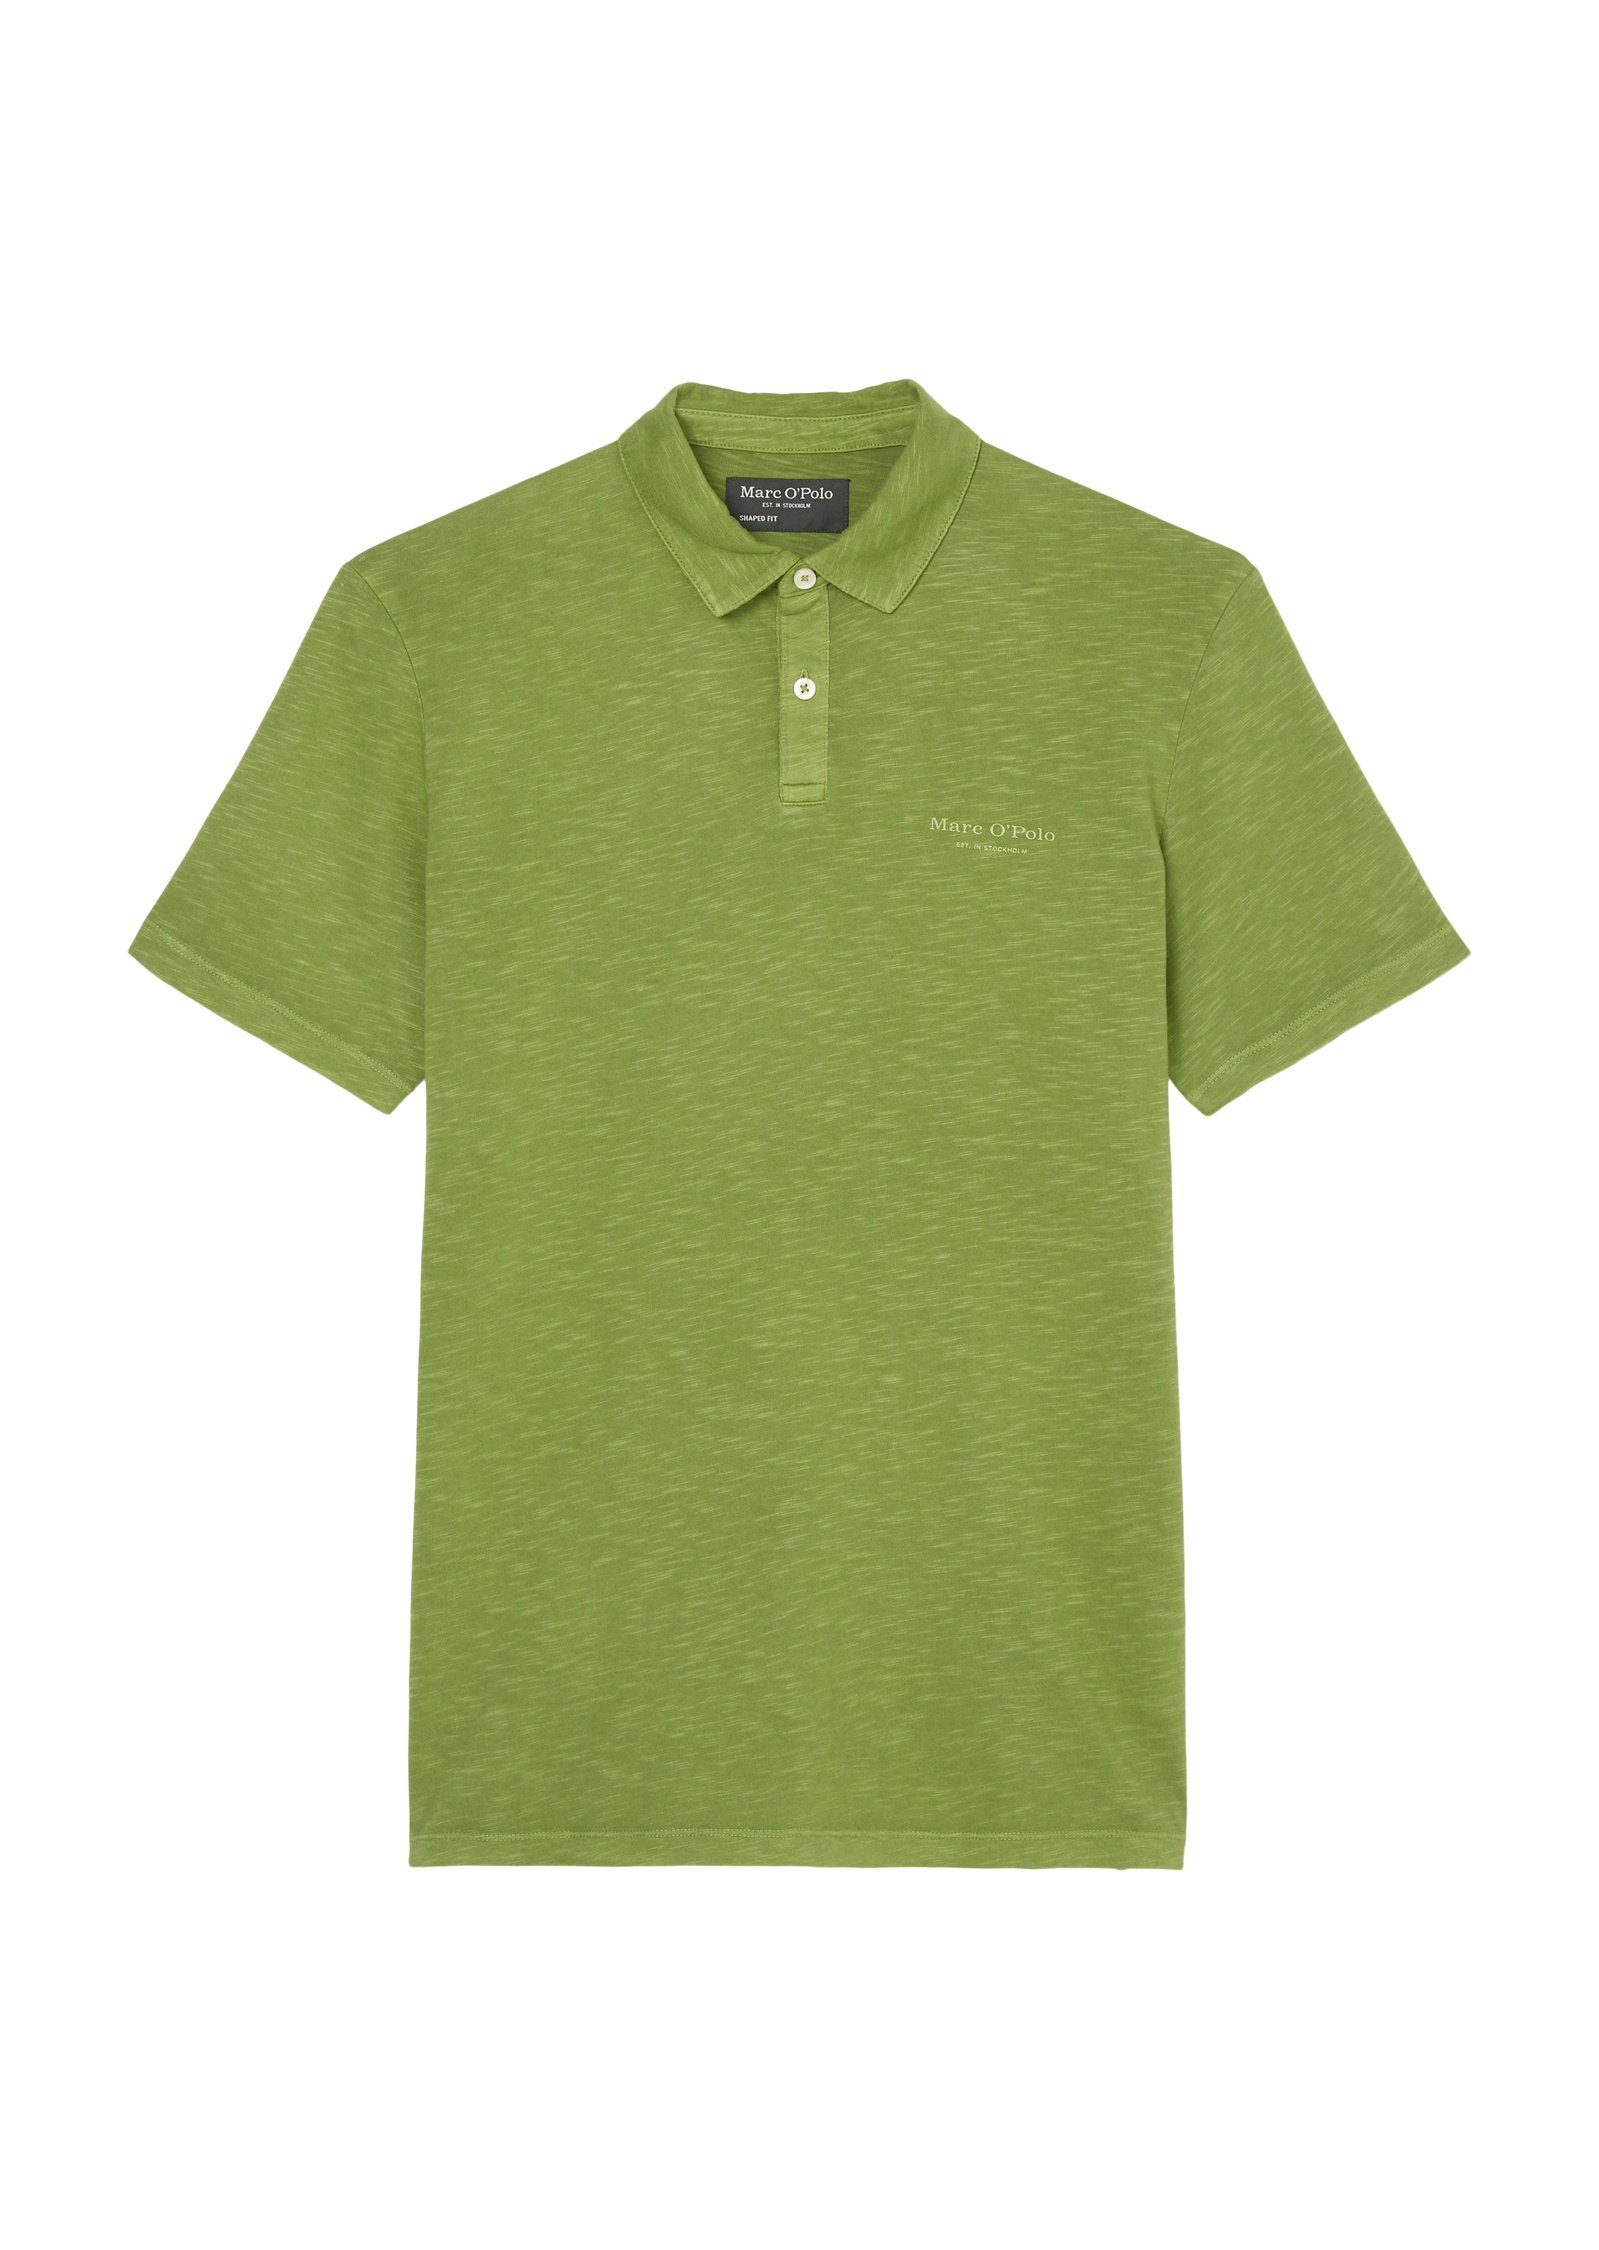 aus O'Polo Marc grün Bio-Baumwolle Poloshirt hochwertiger